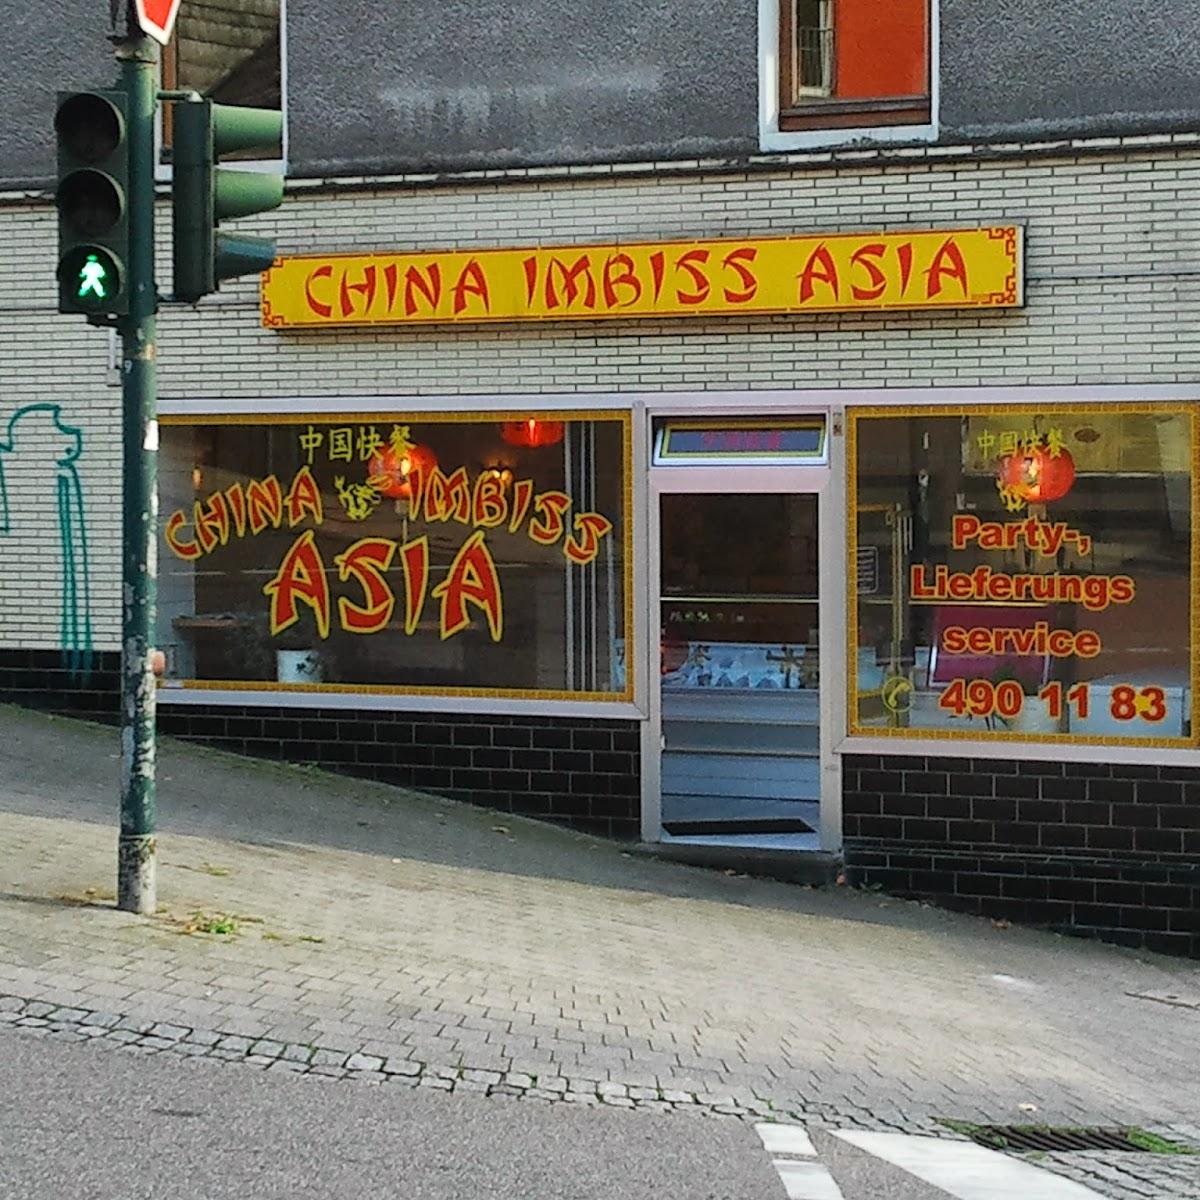 Restaurant "China Imbiss Asia" in Essen